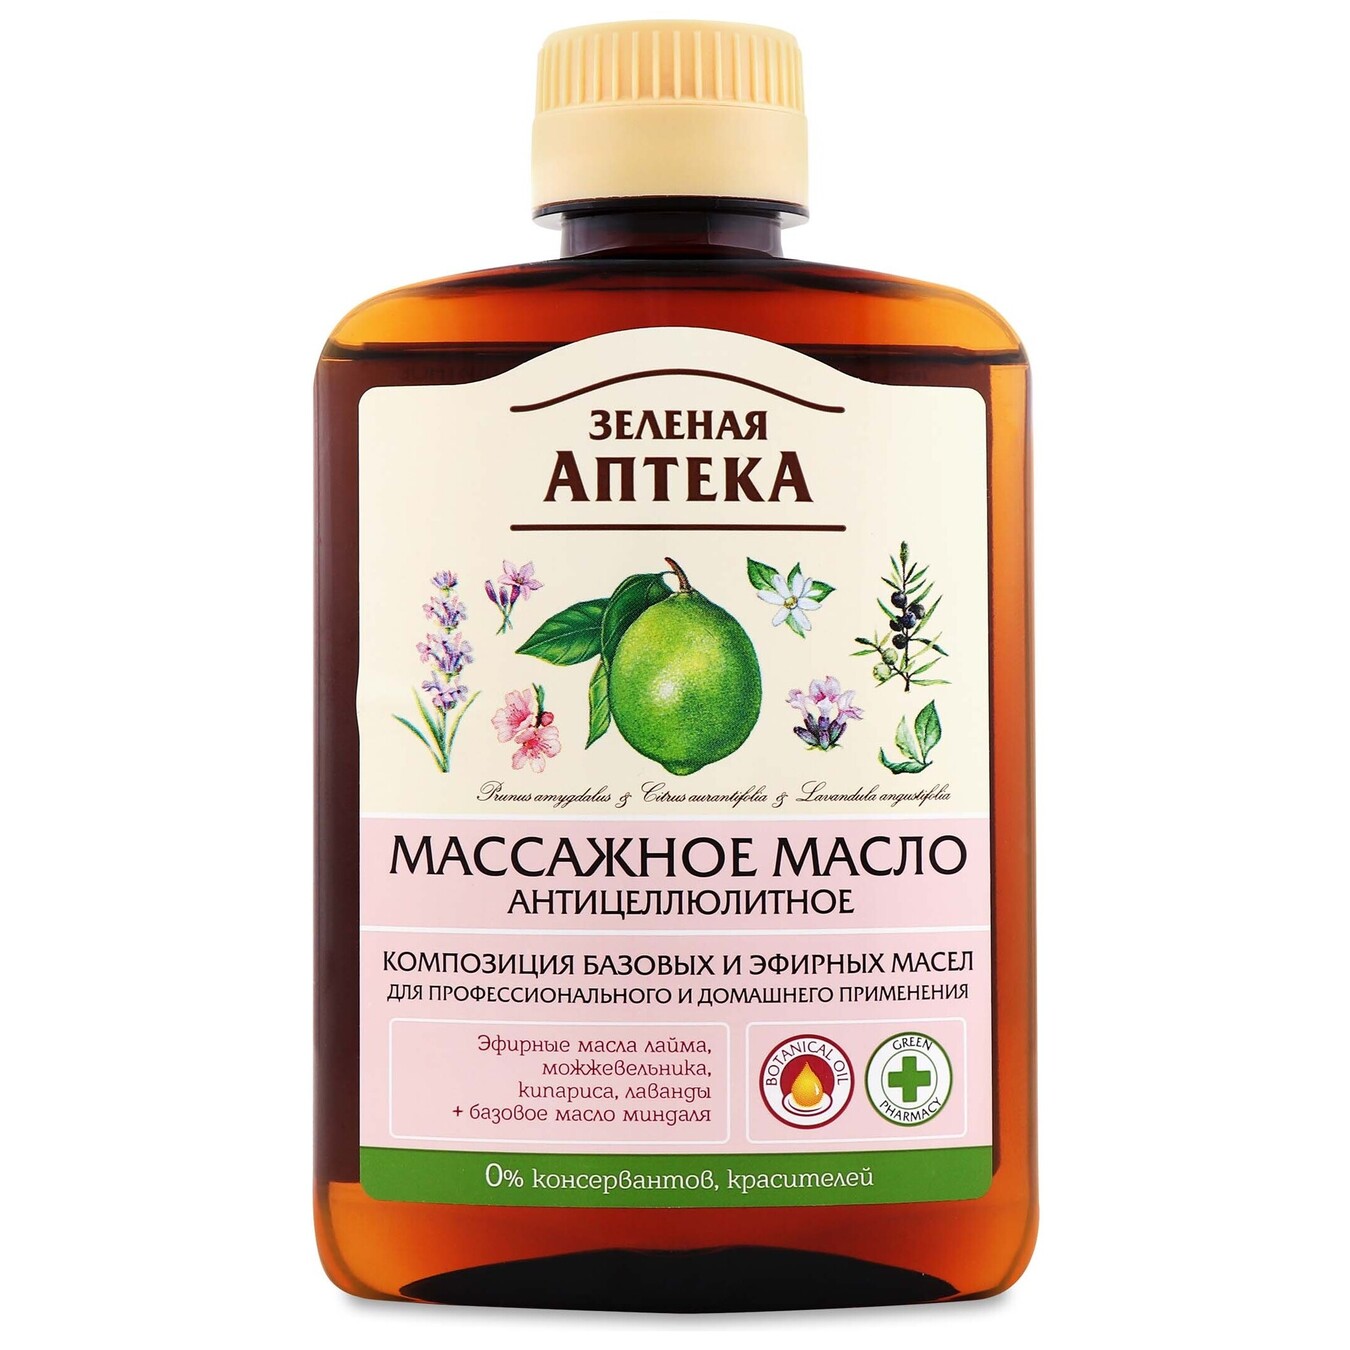 Zelena Apteka anti-cellulite massage oil 200ml